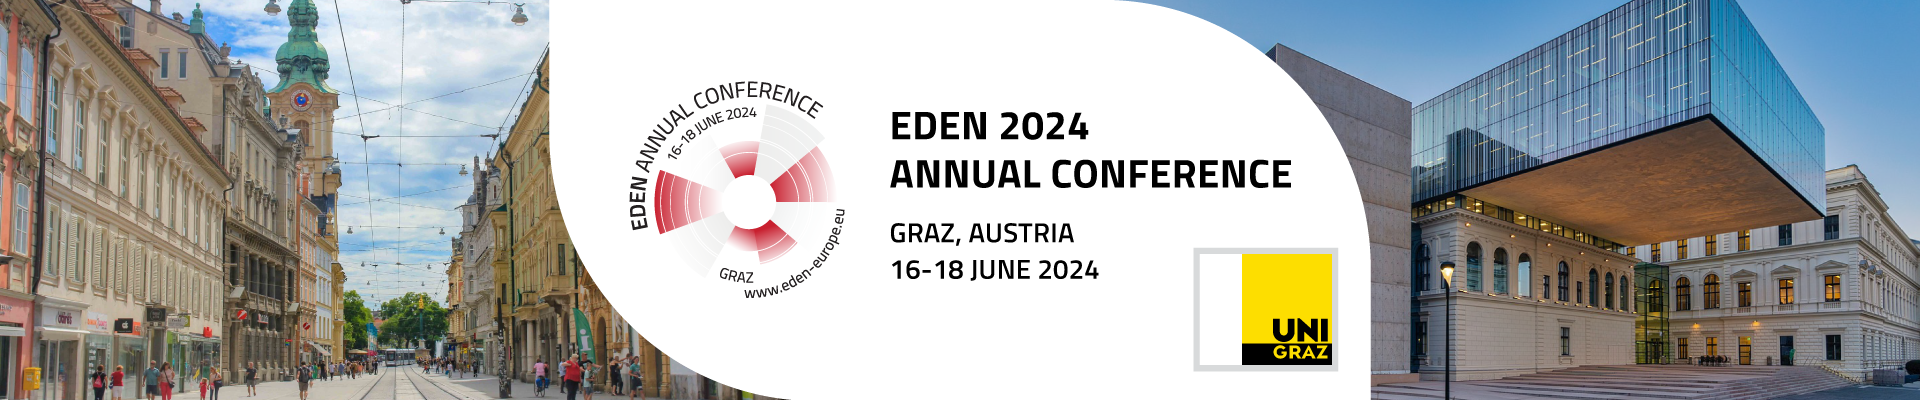 EDEN 2024 Annual Conference in Graz – Eden